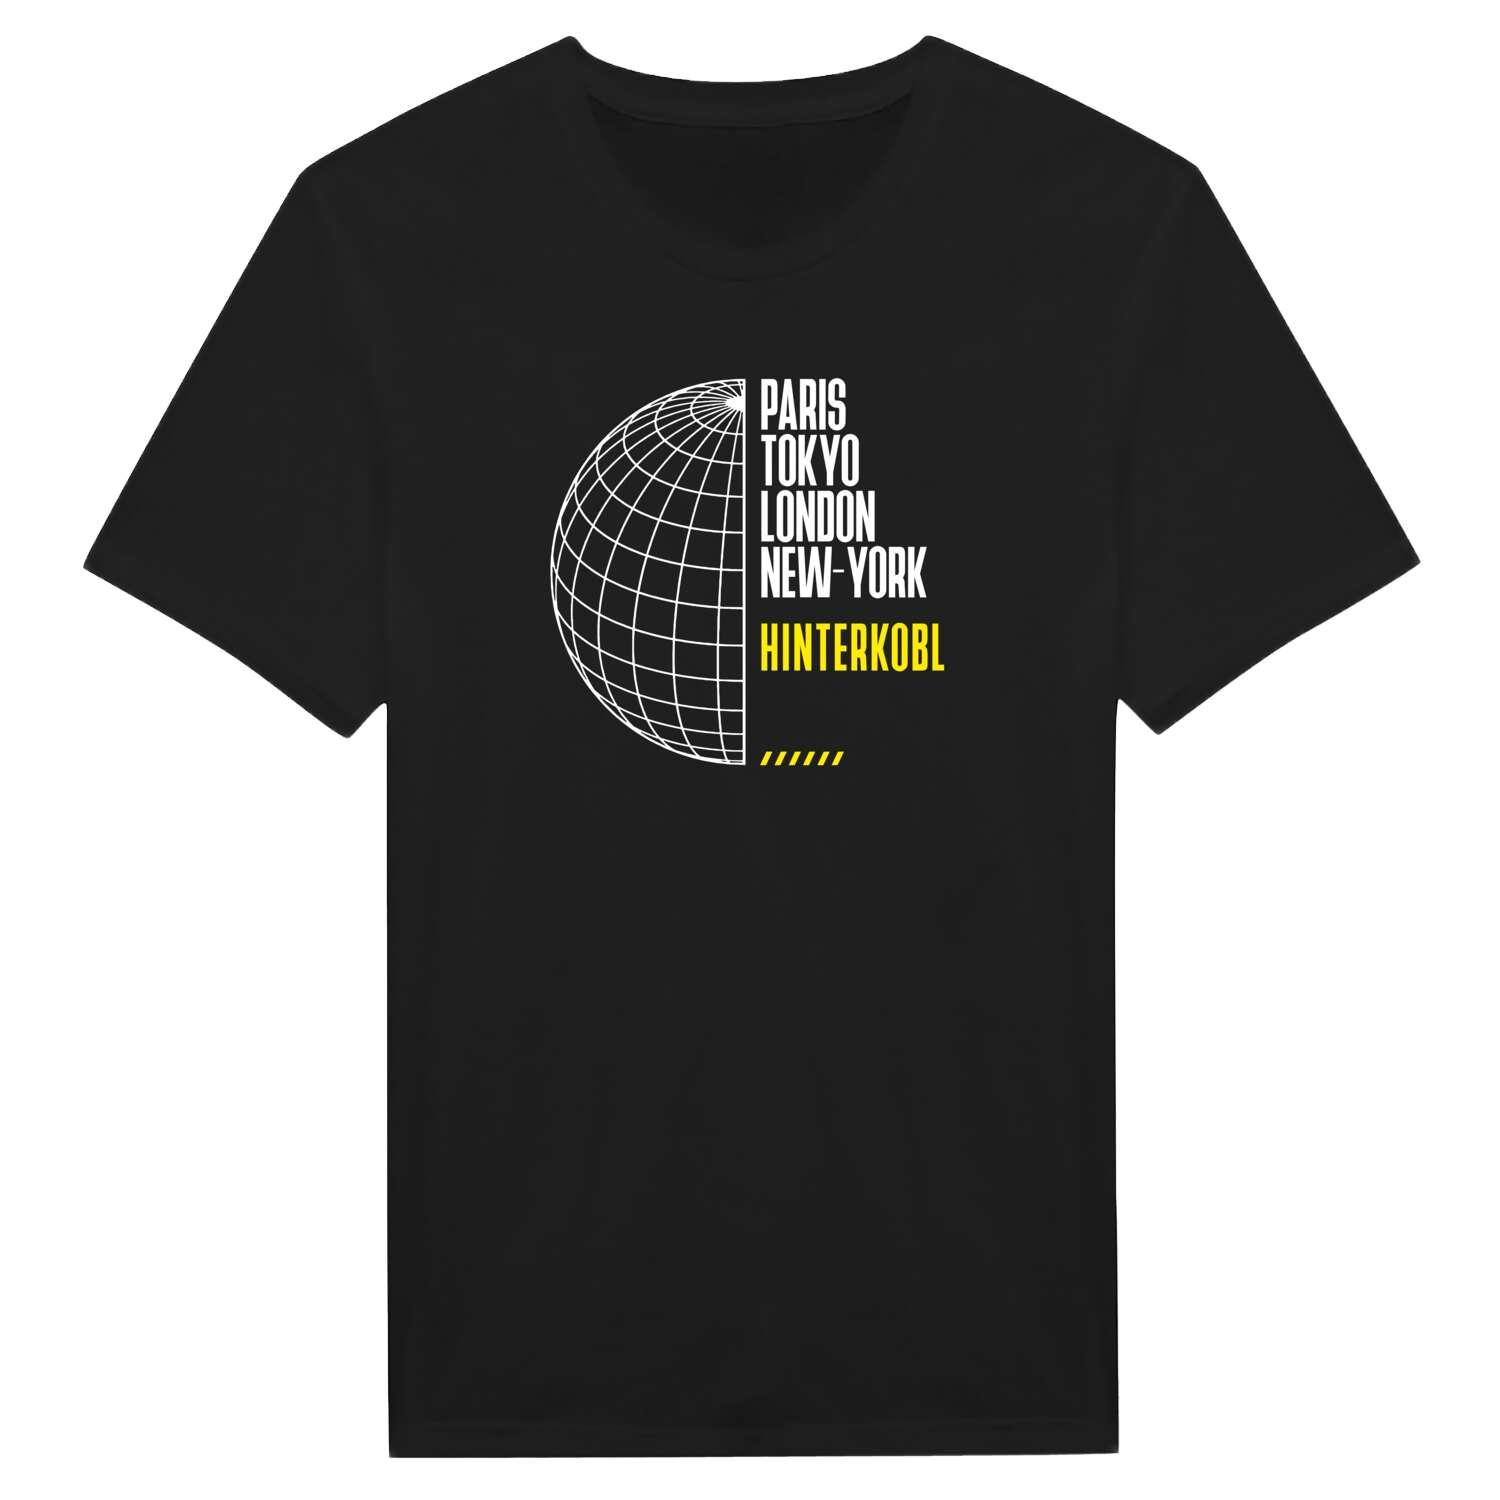 Hinterkobl T-Shirt »Paris Tokyo London«